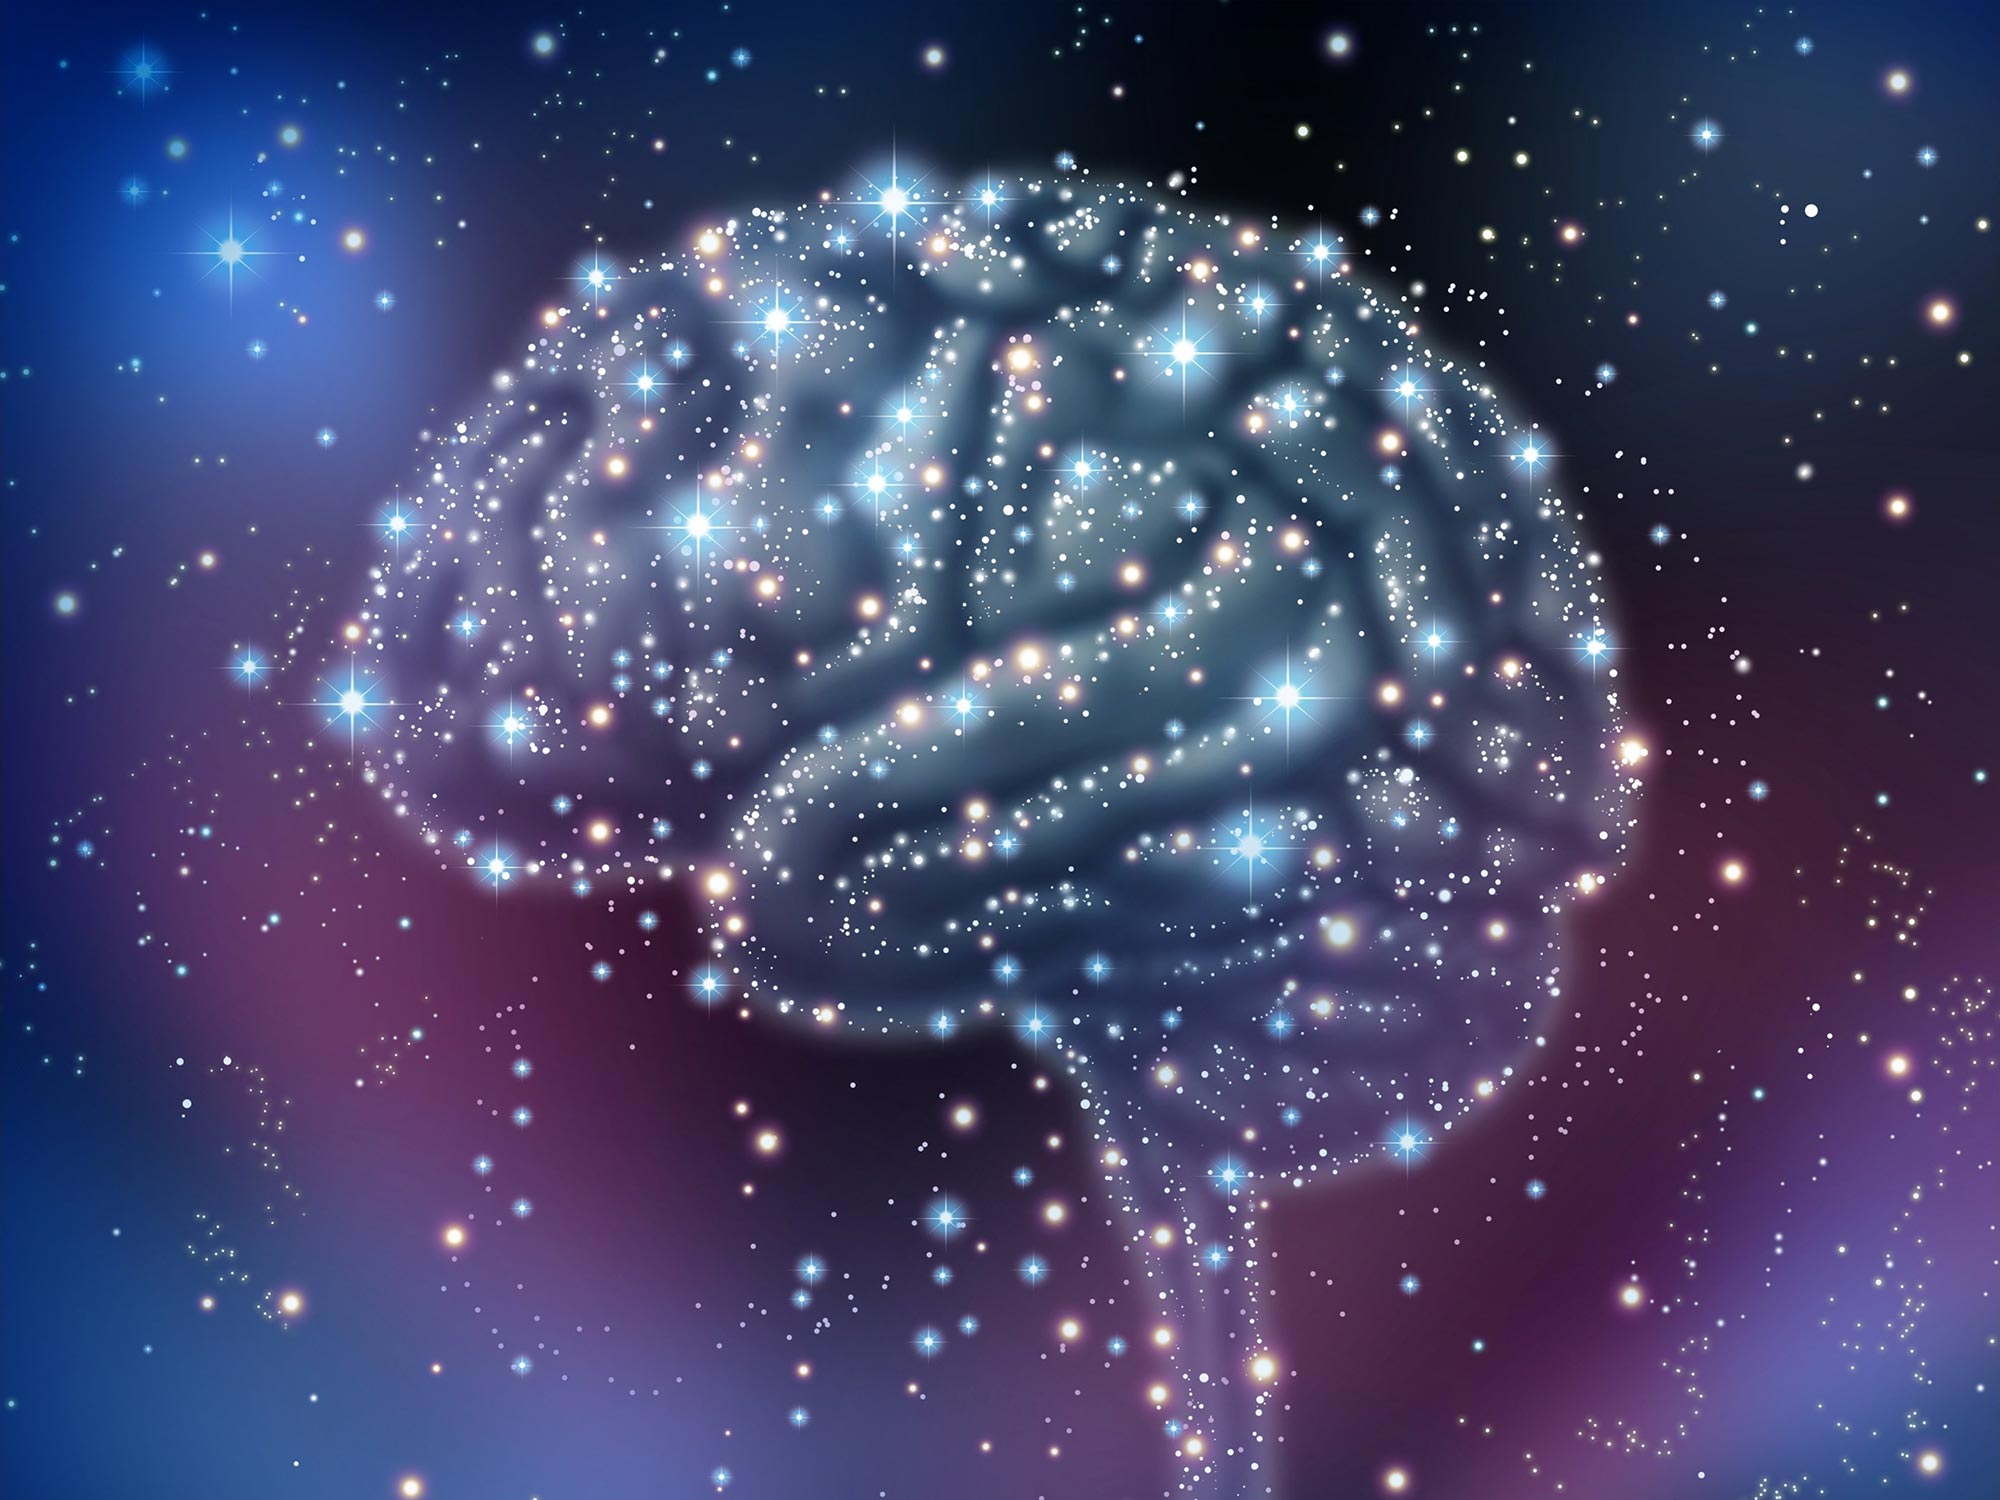 Conceito de mistério de felicidade de consciência de dopamina do cérebro humano